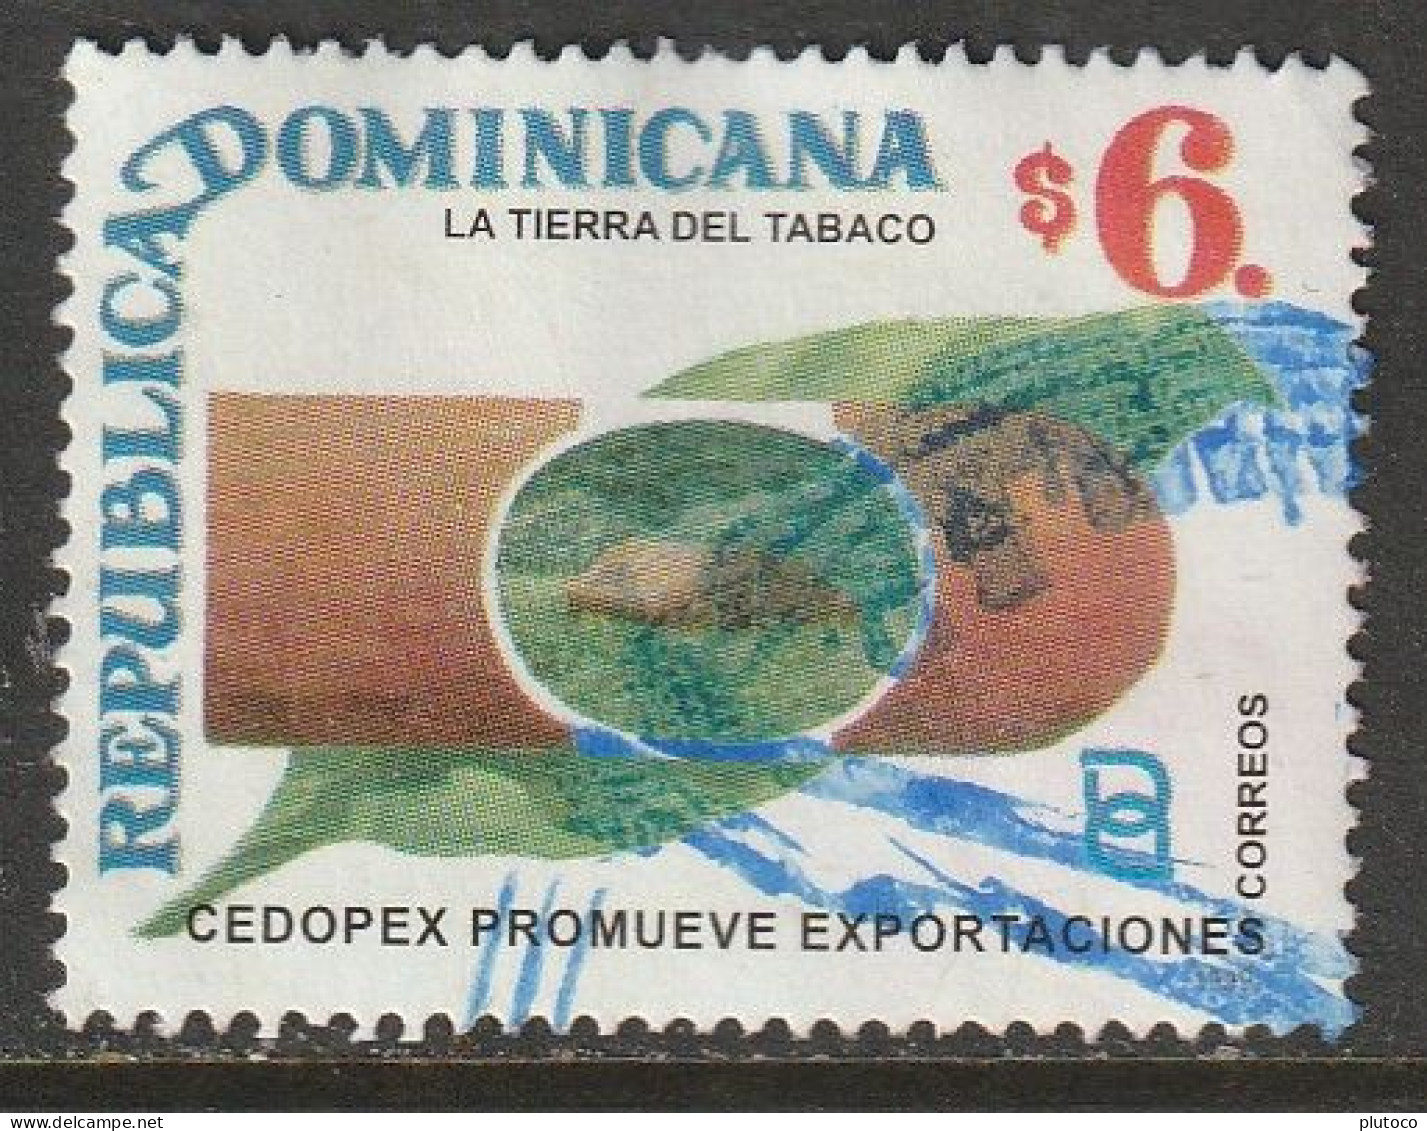 REPÚBLICA DOMINICANA, USED STAMP, OBLITERÉ, SELLO USADO - Dominican Republic